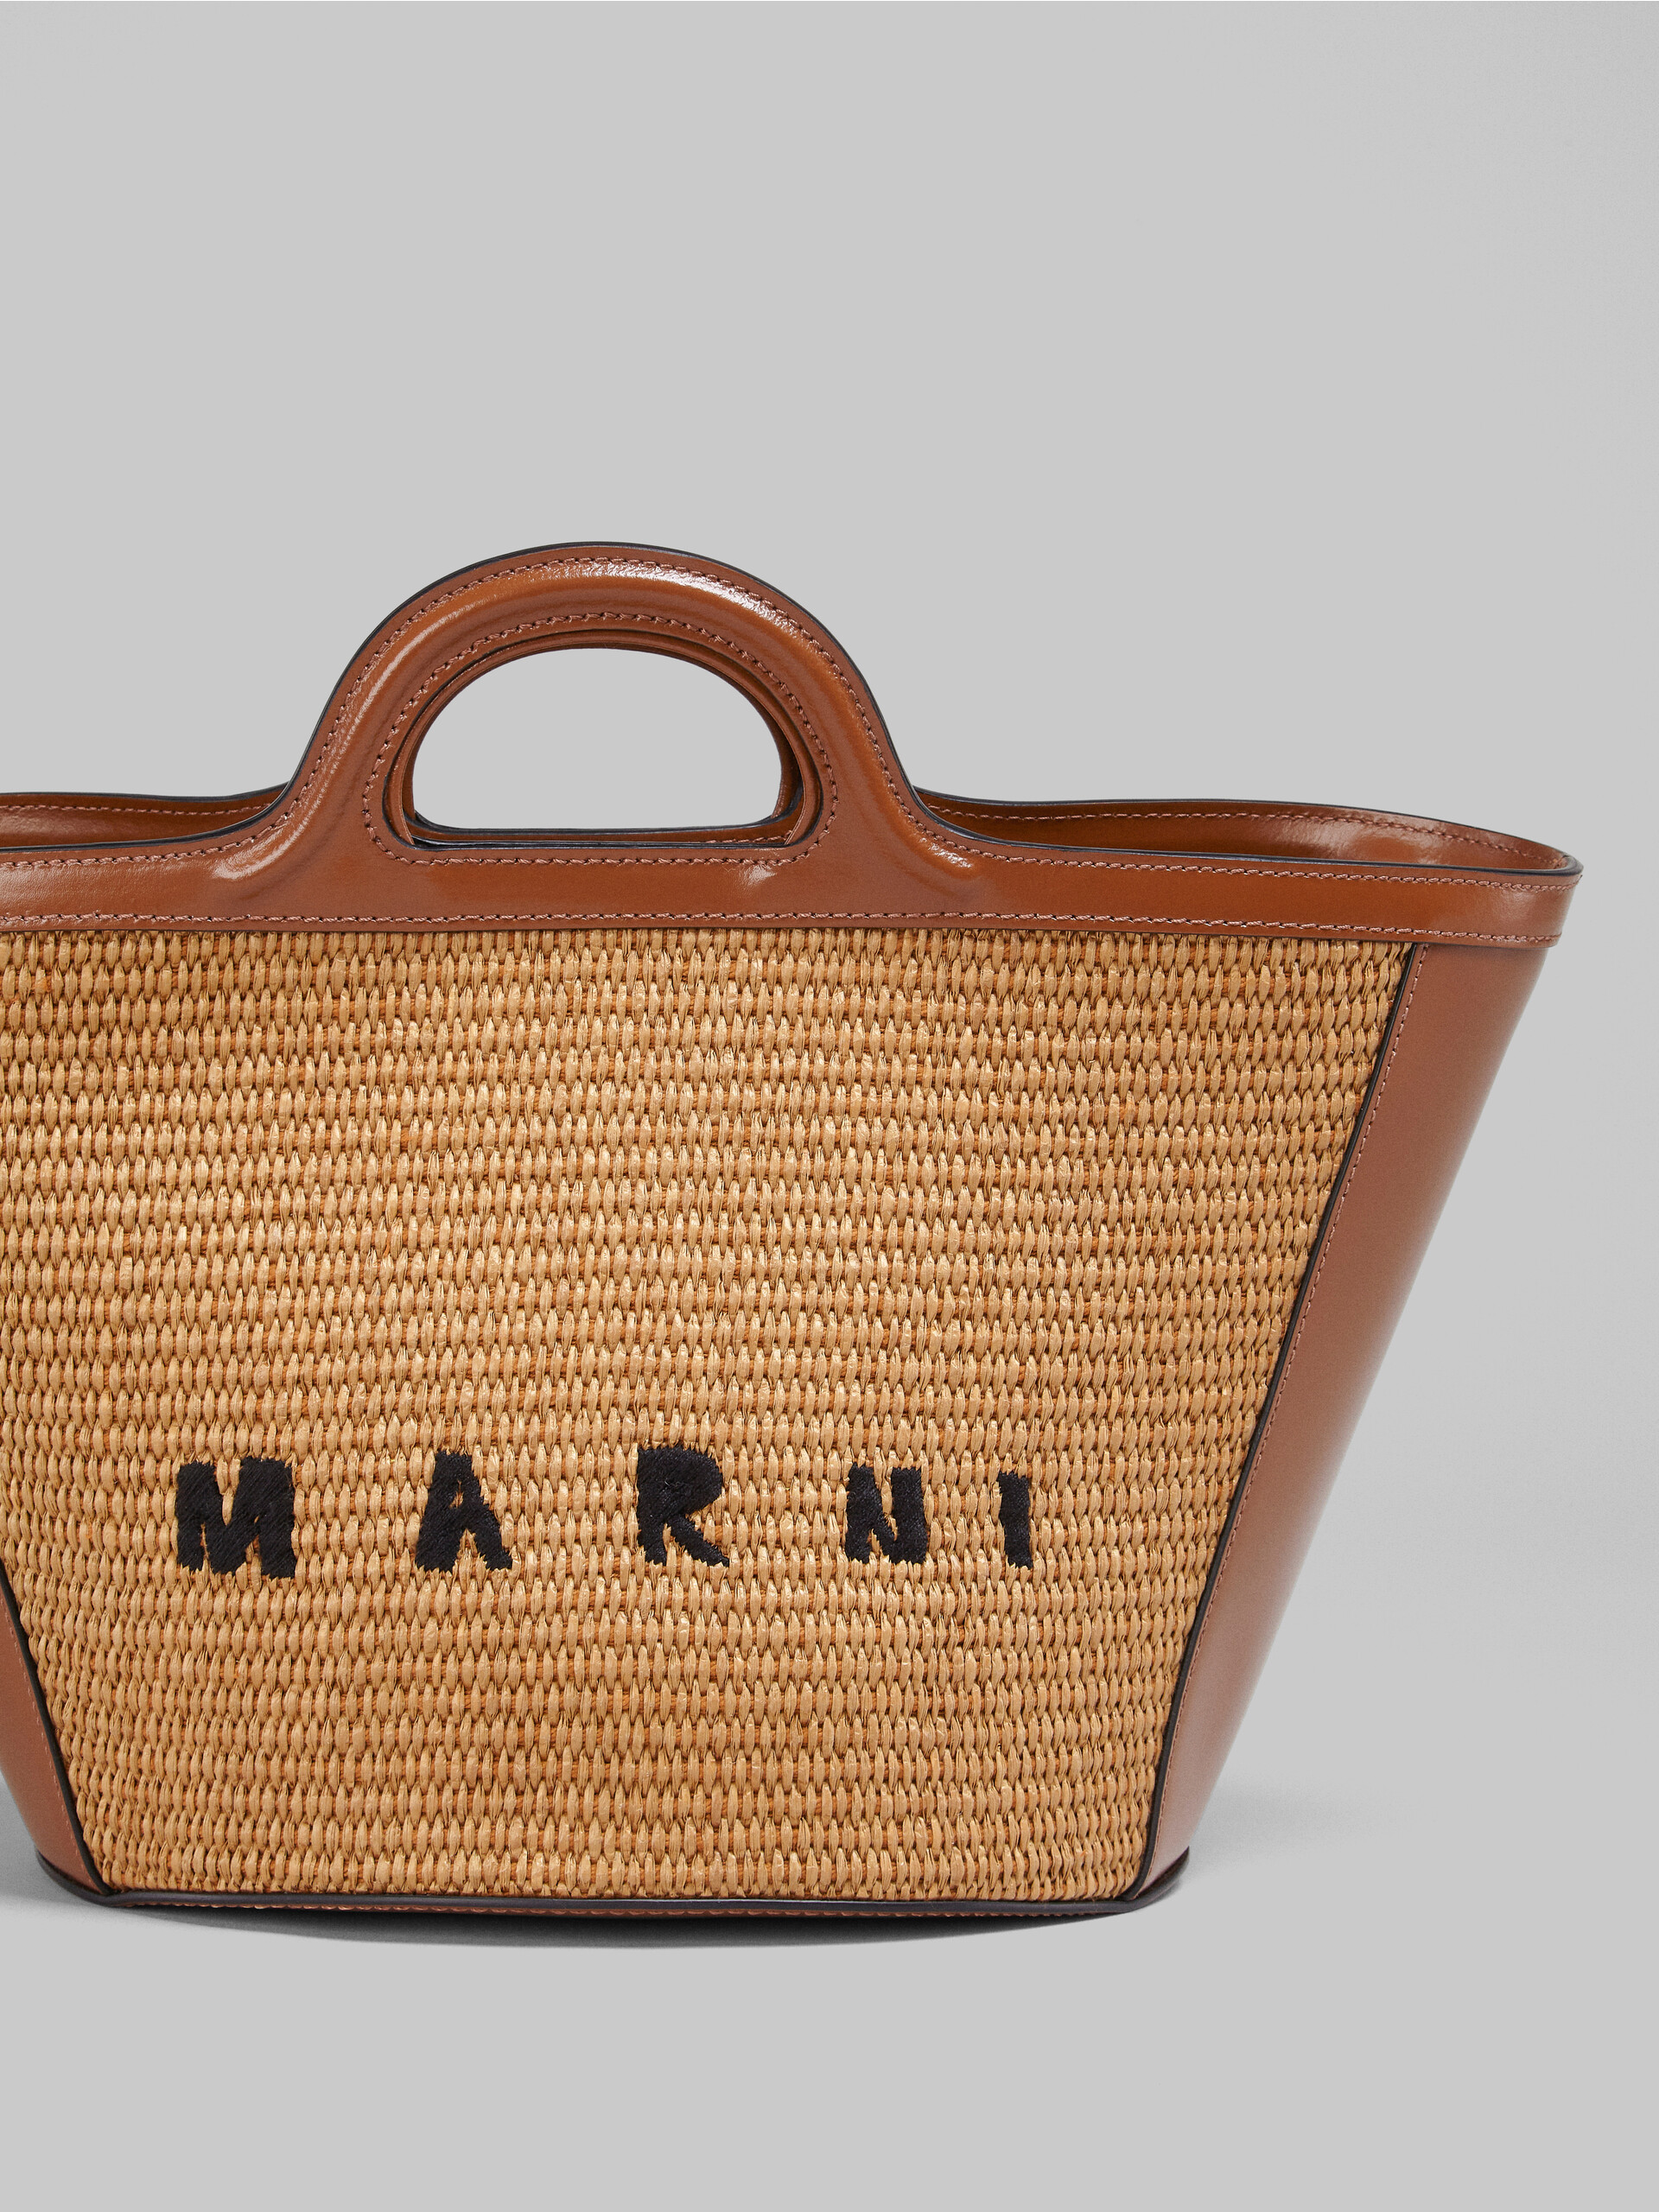 Tropicalia Small Bag in brown leather and raffia - Handbag - Image 4